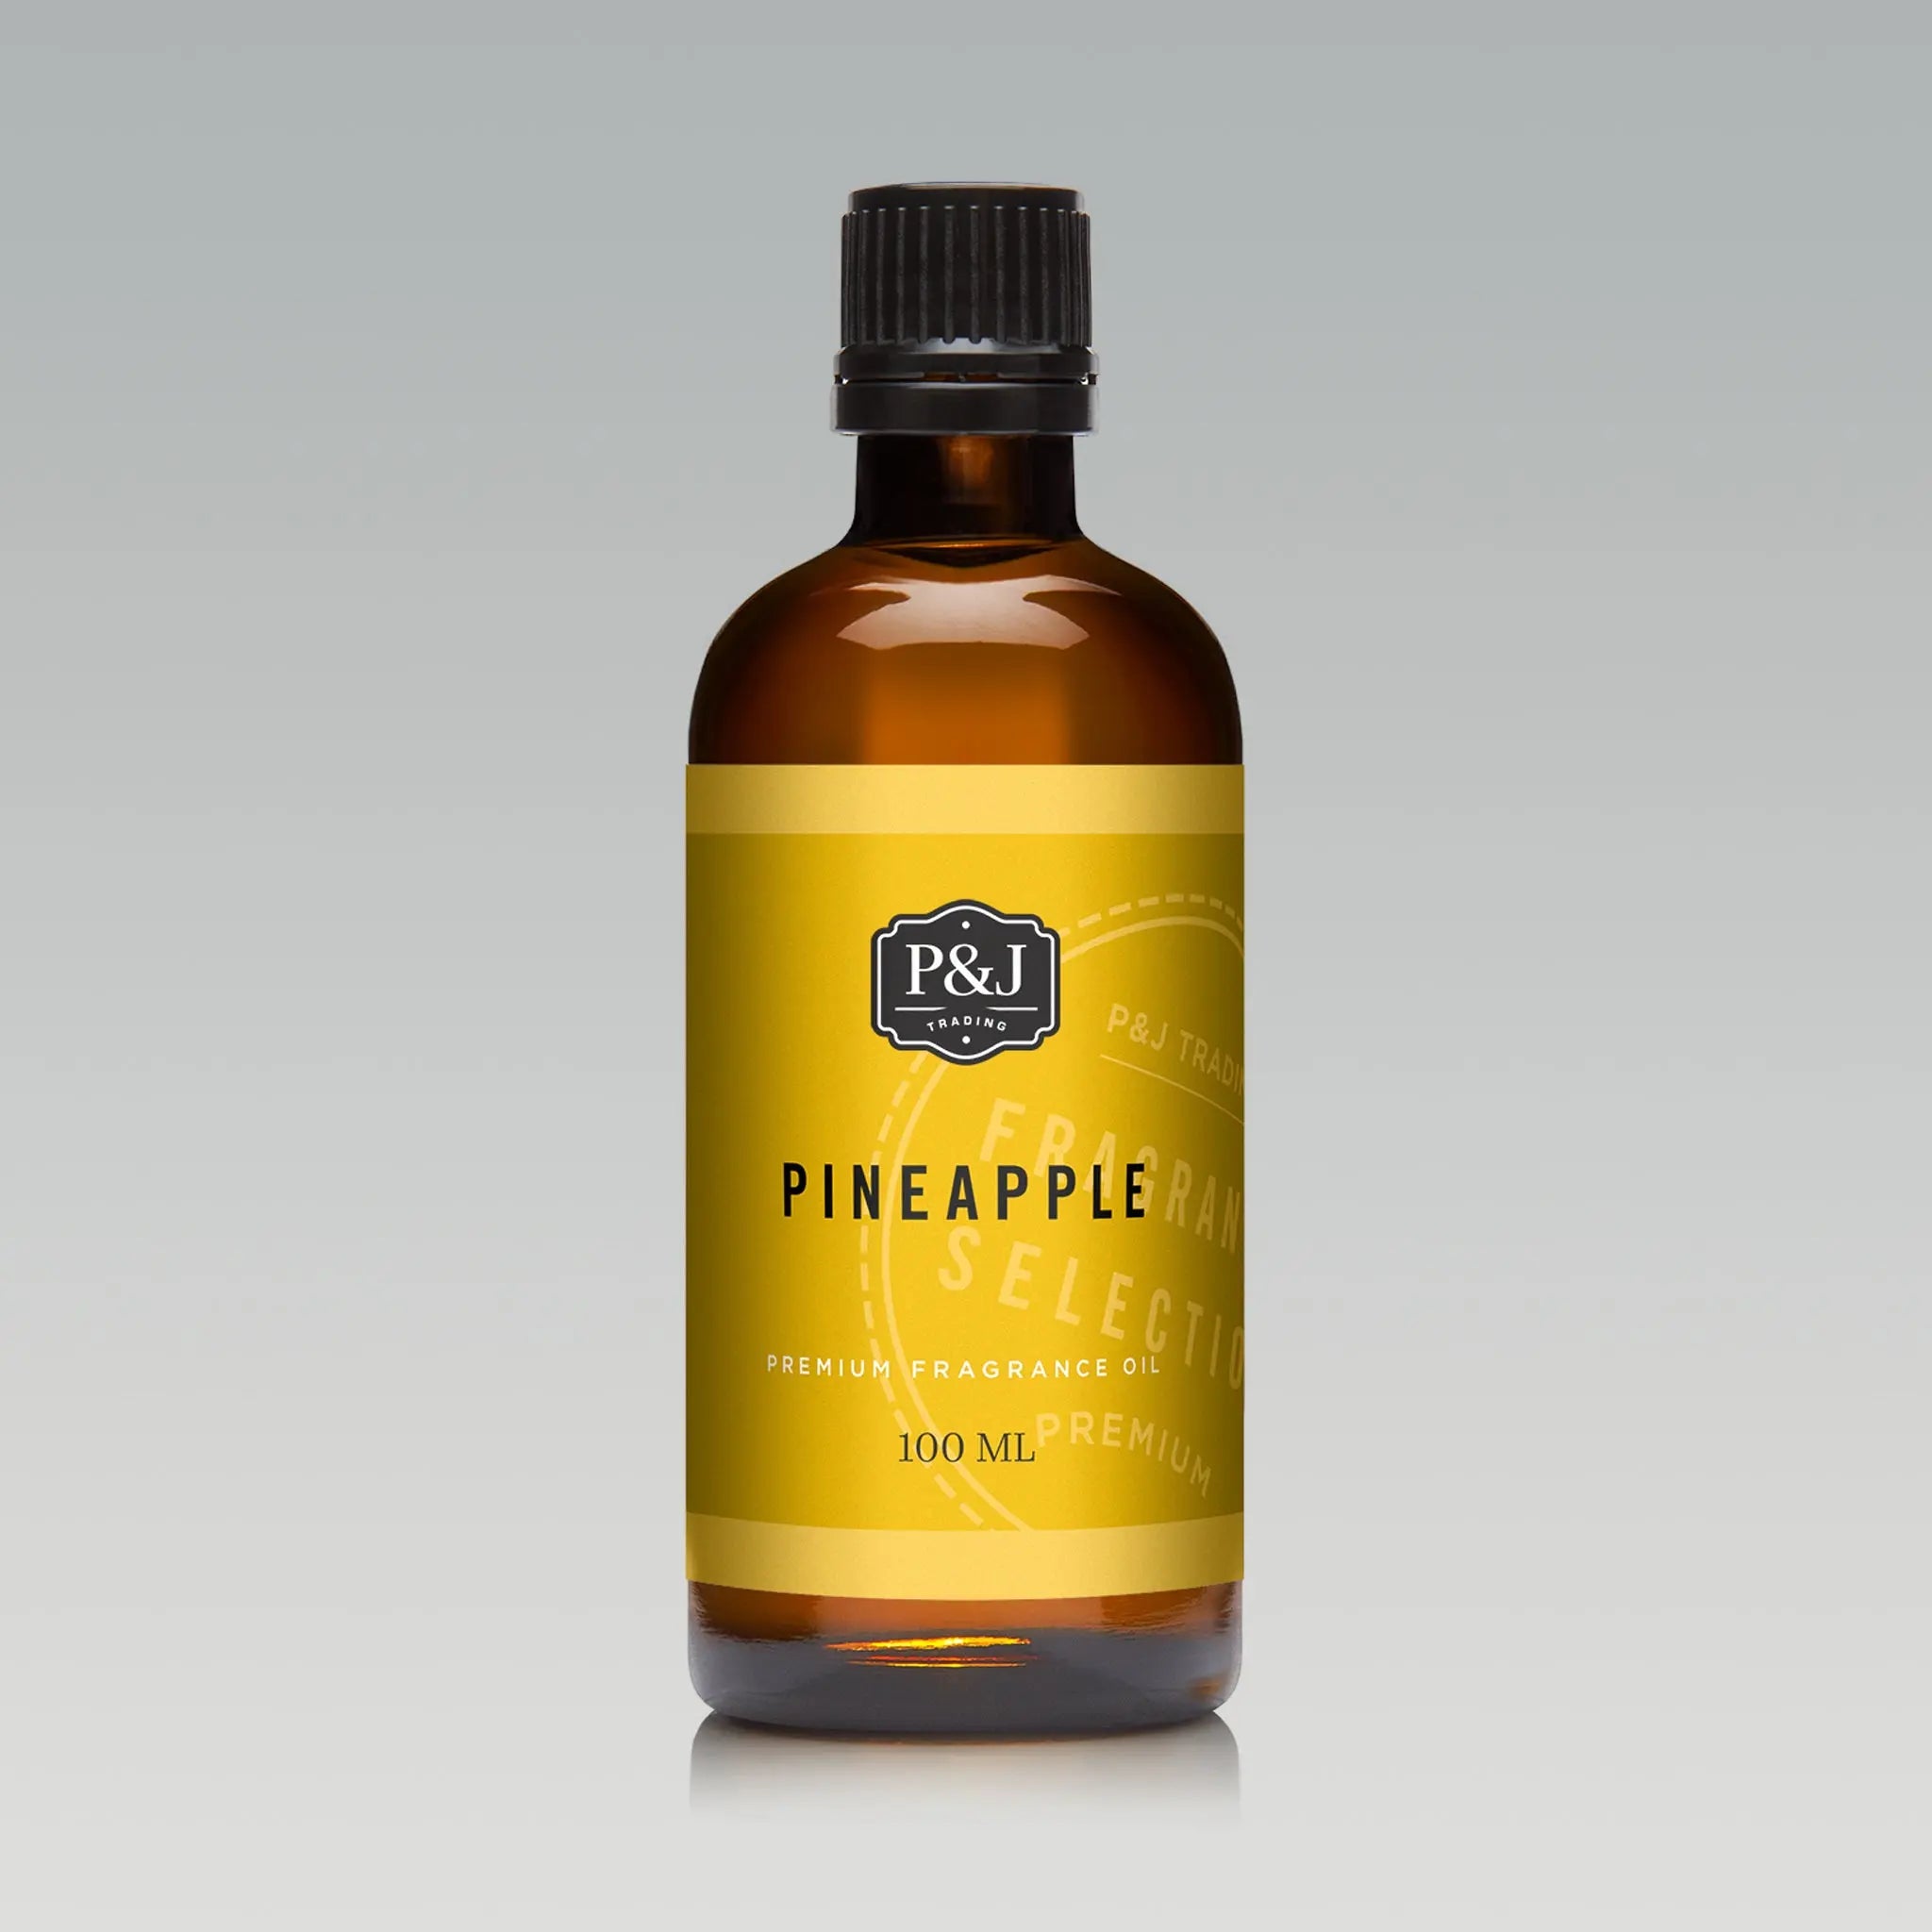 Pair (2) - Pineapple & Mango - Premium Fragrance Oil Pair - 10ML